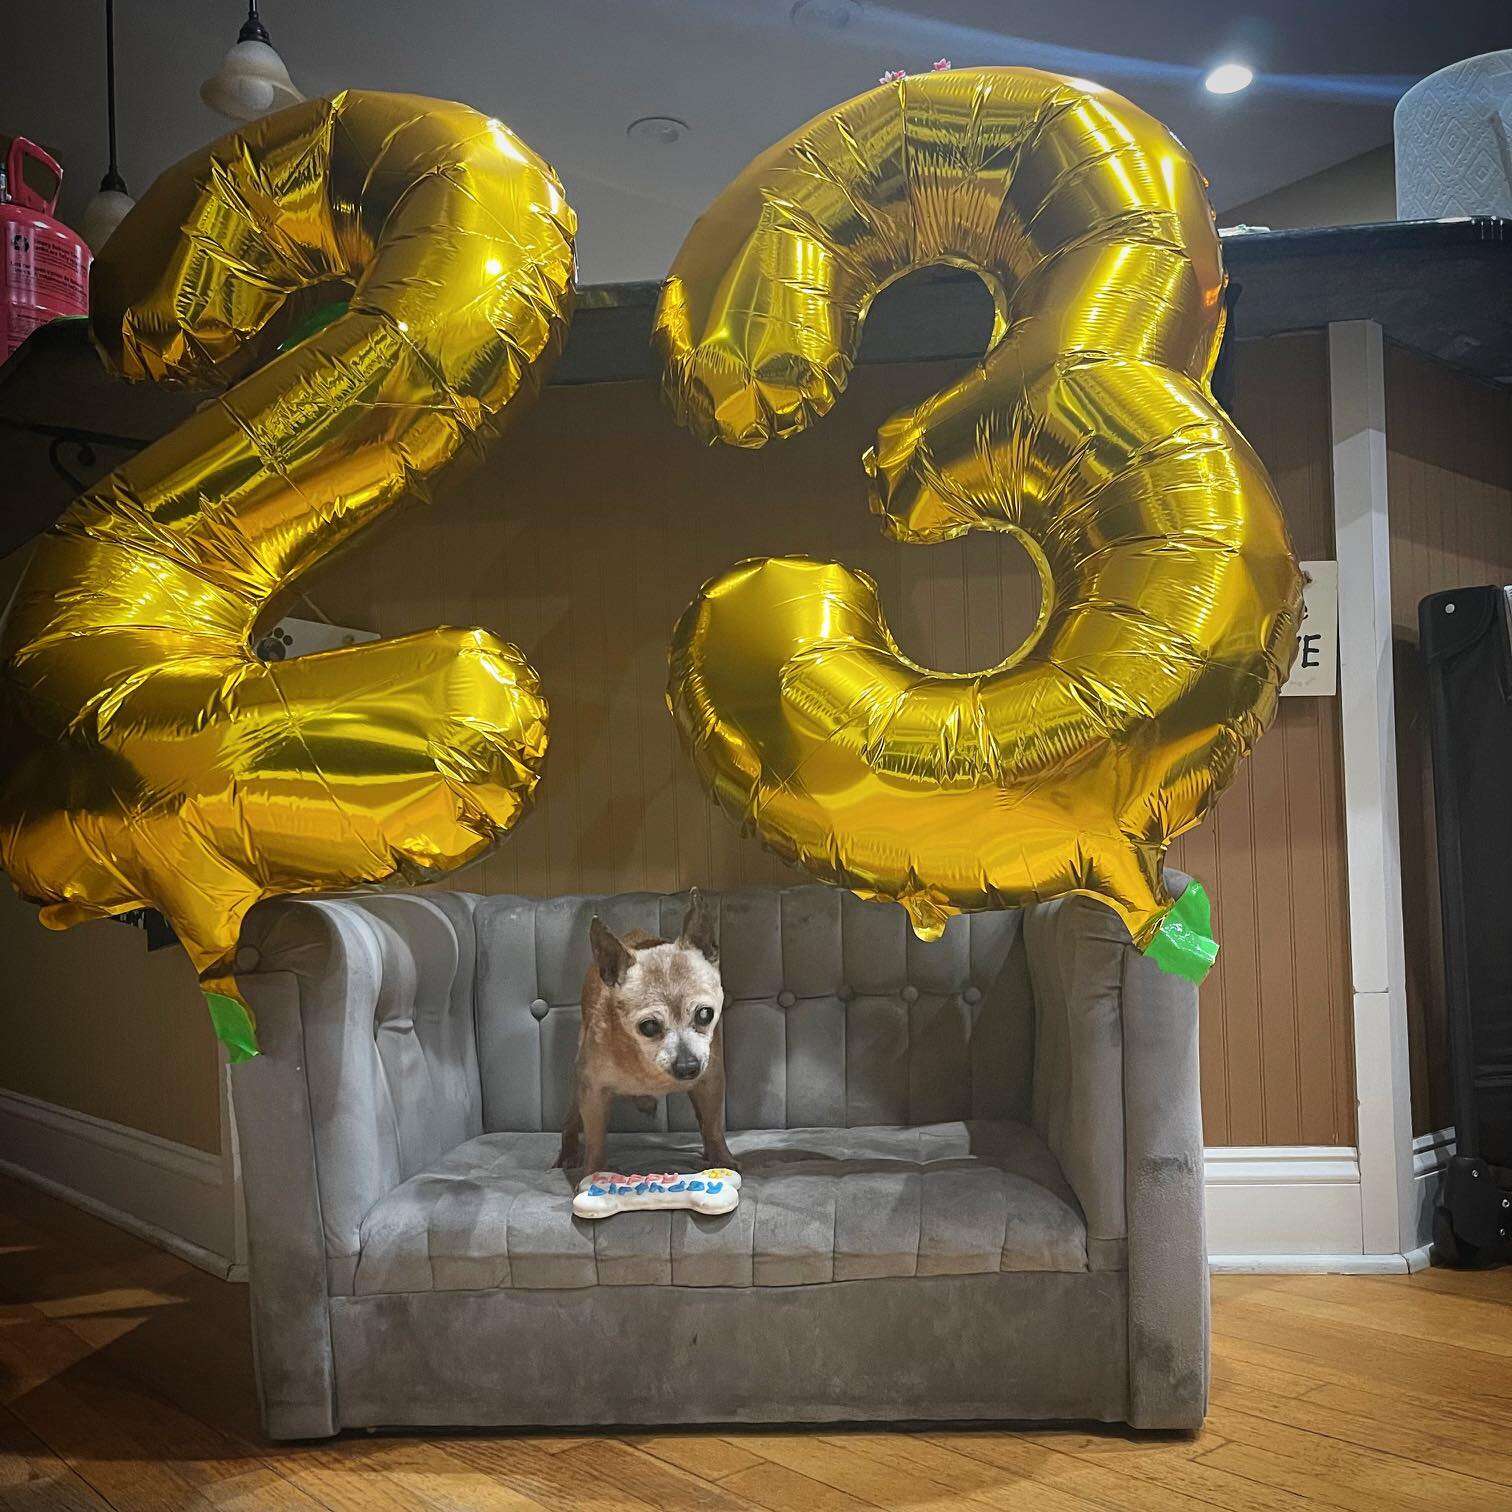 Chihuahua celebrates his 23rd birthday